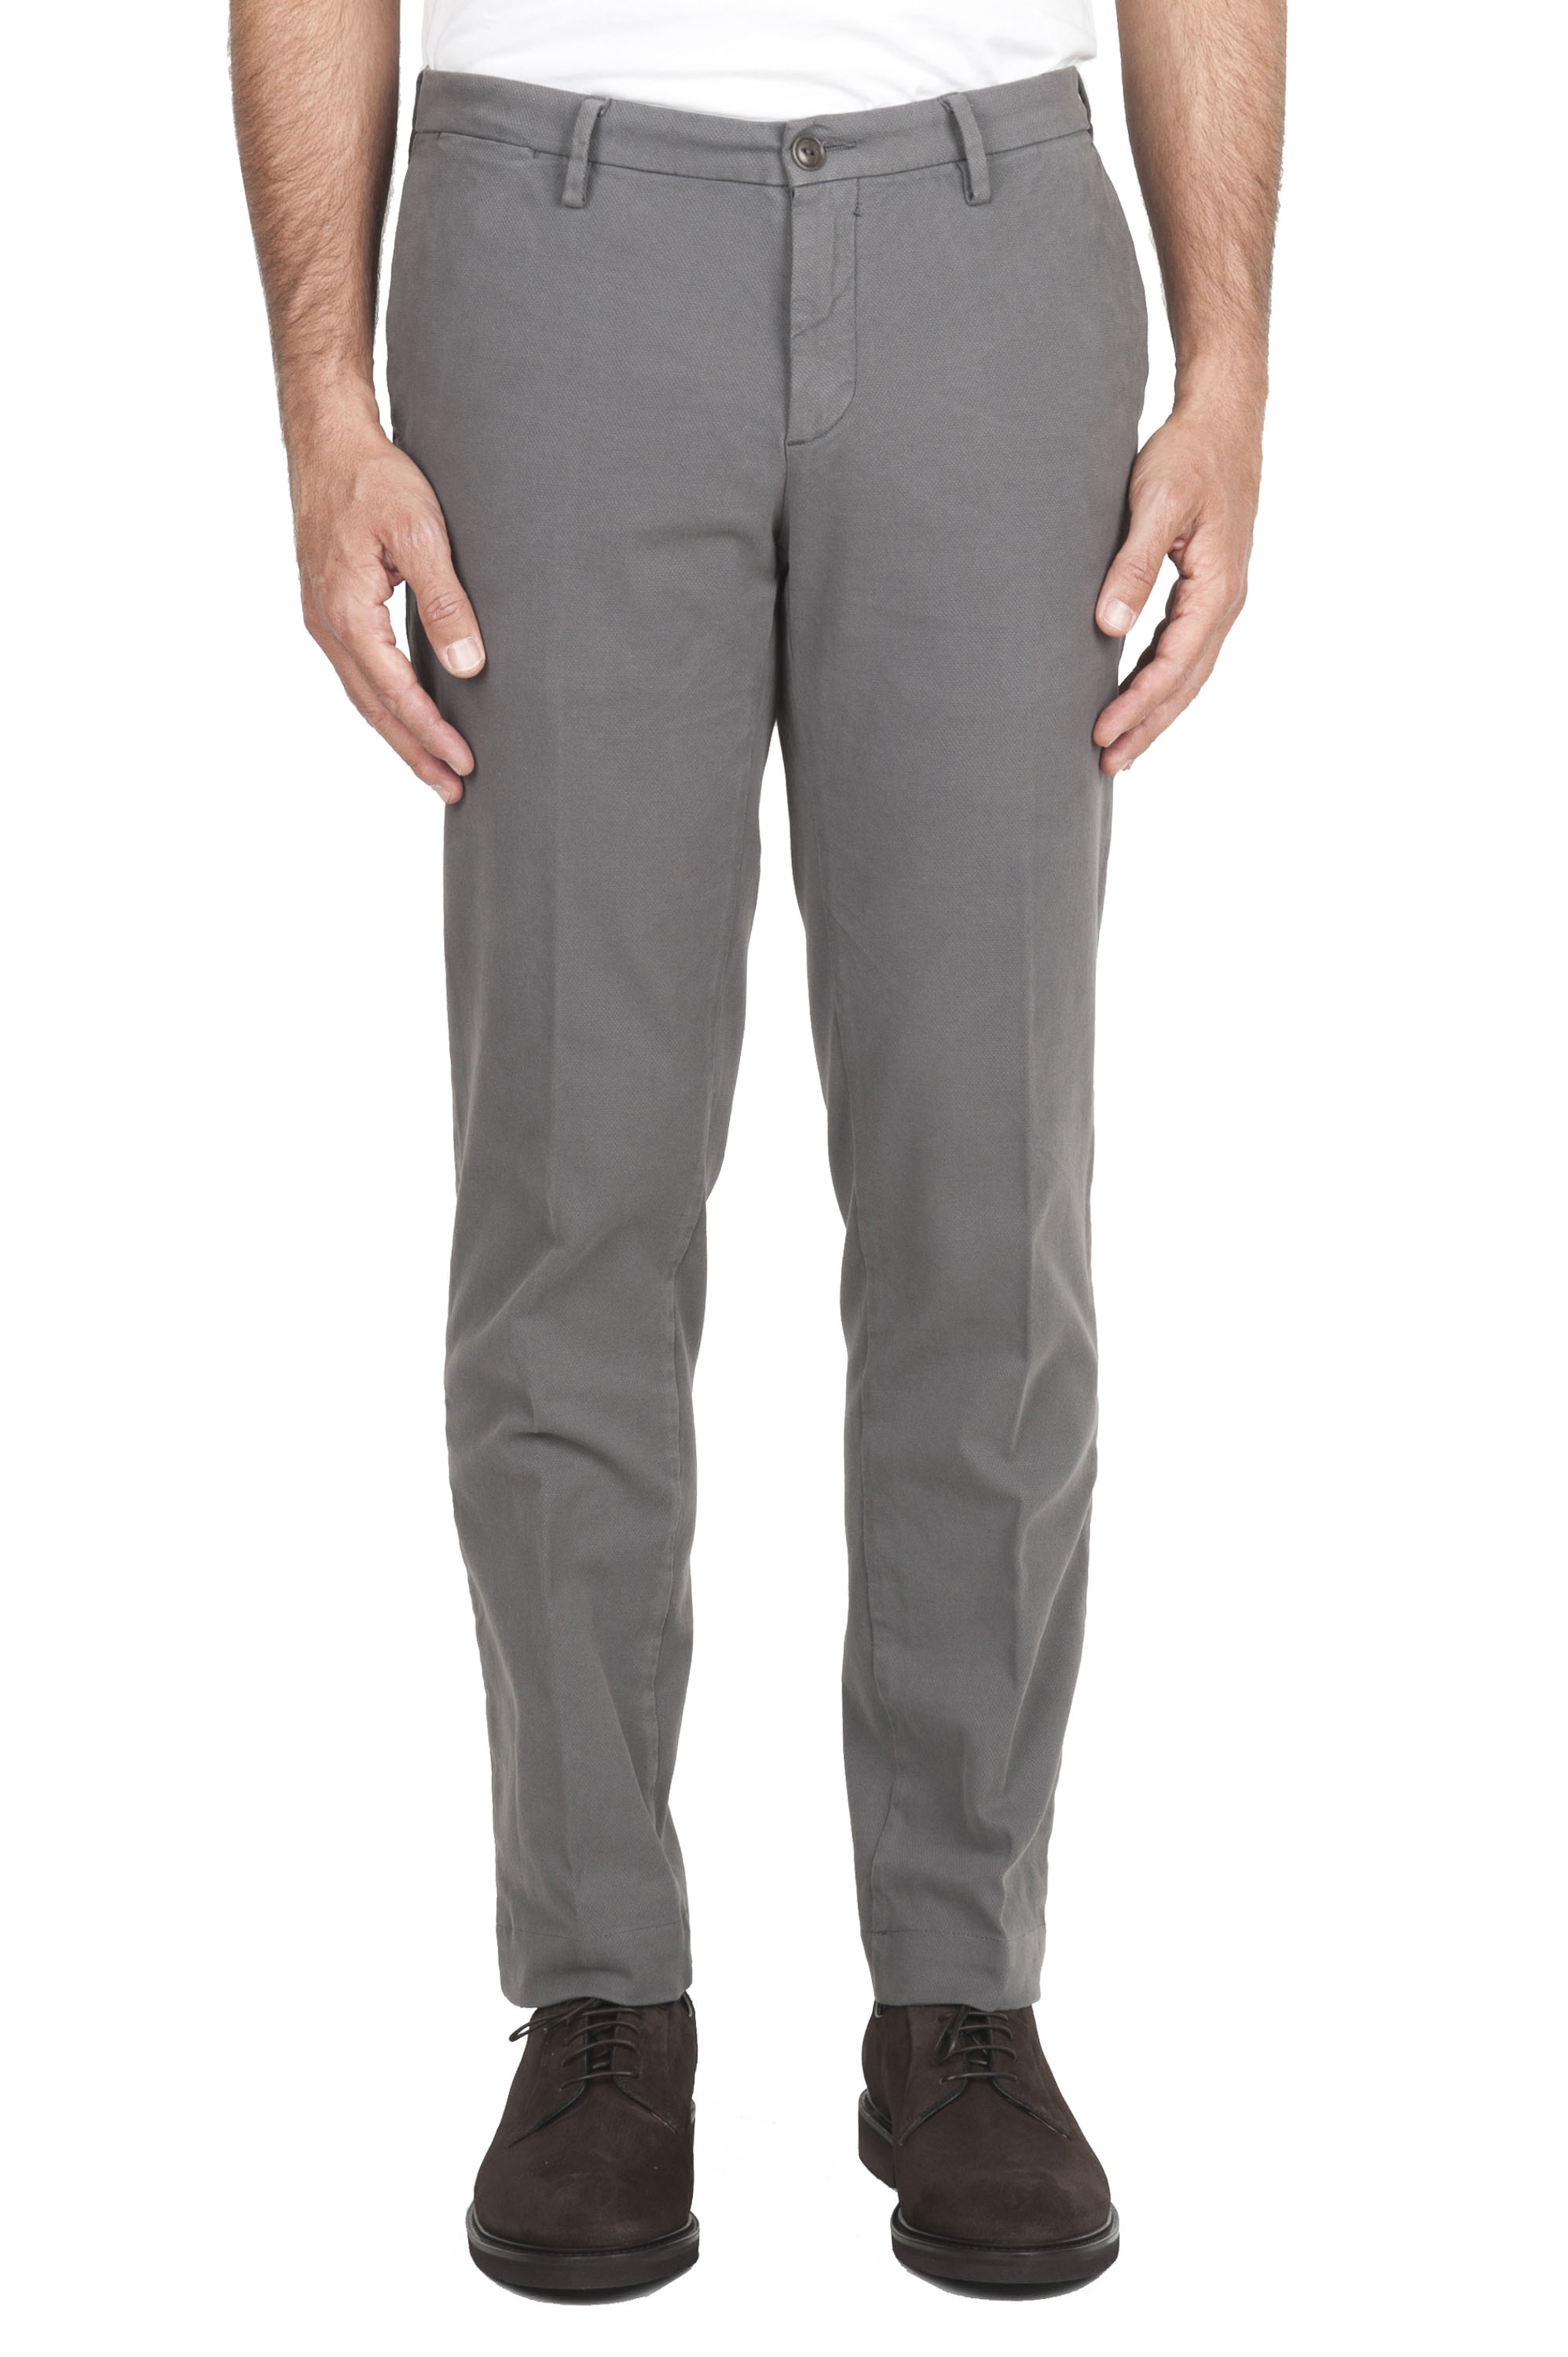 SBU 01543 Pantalon chino classique en coton stretch gris clair 01